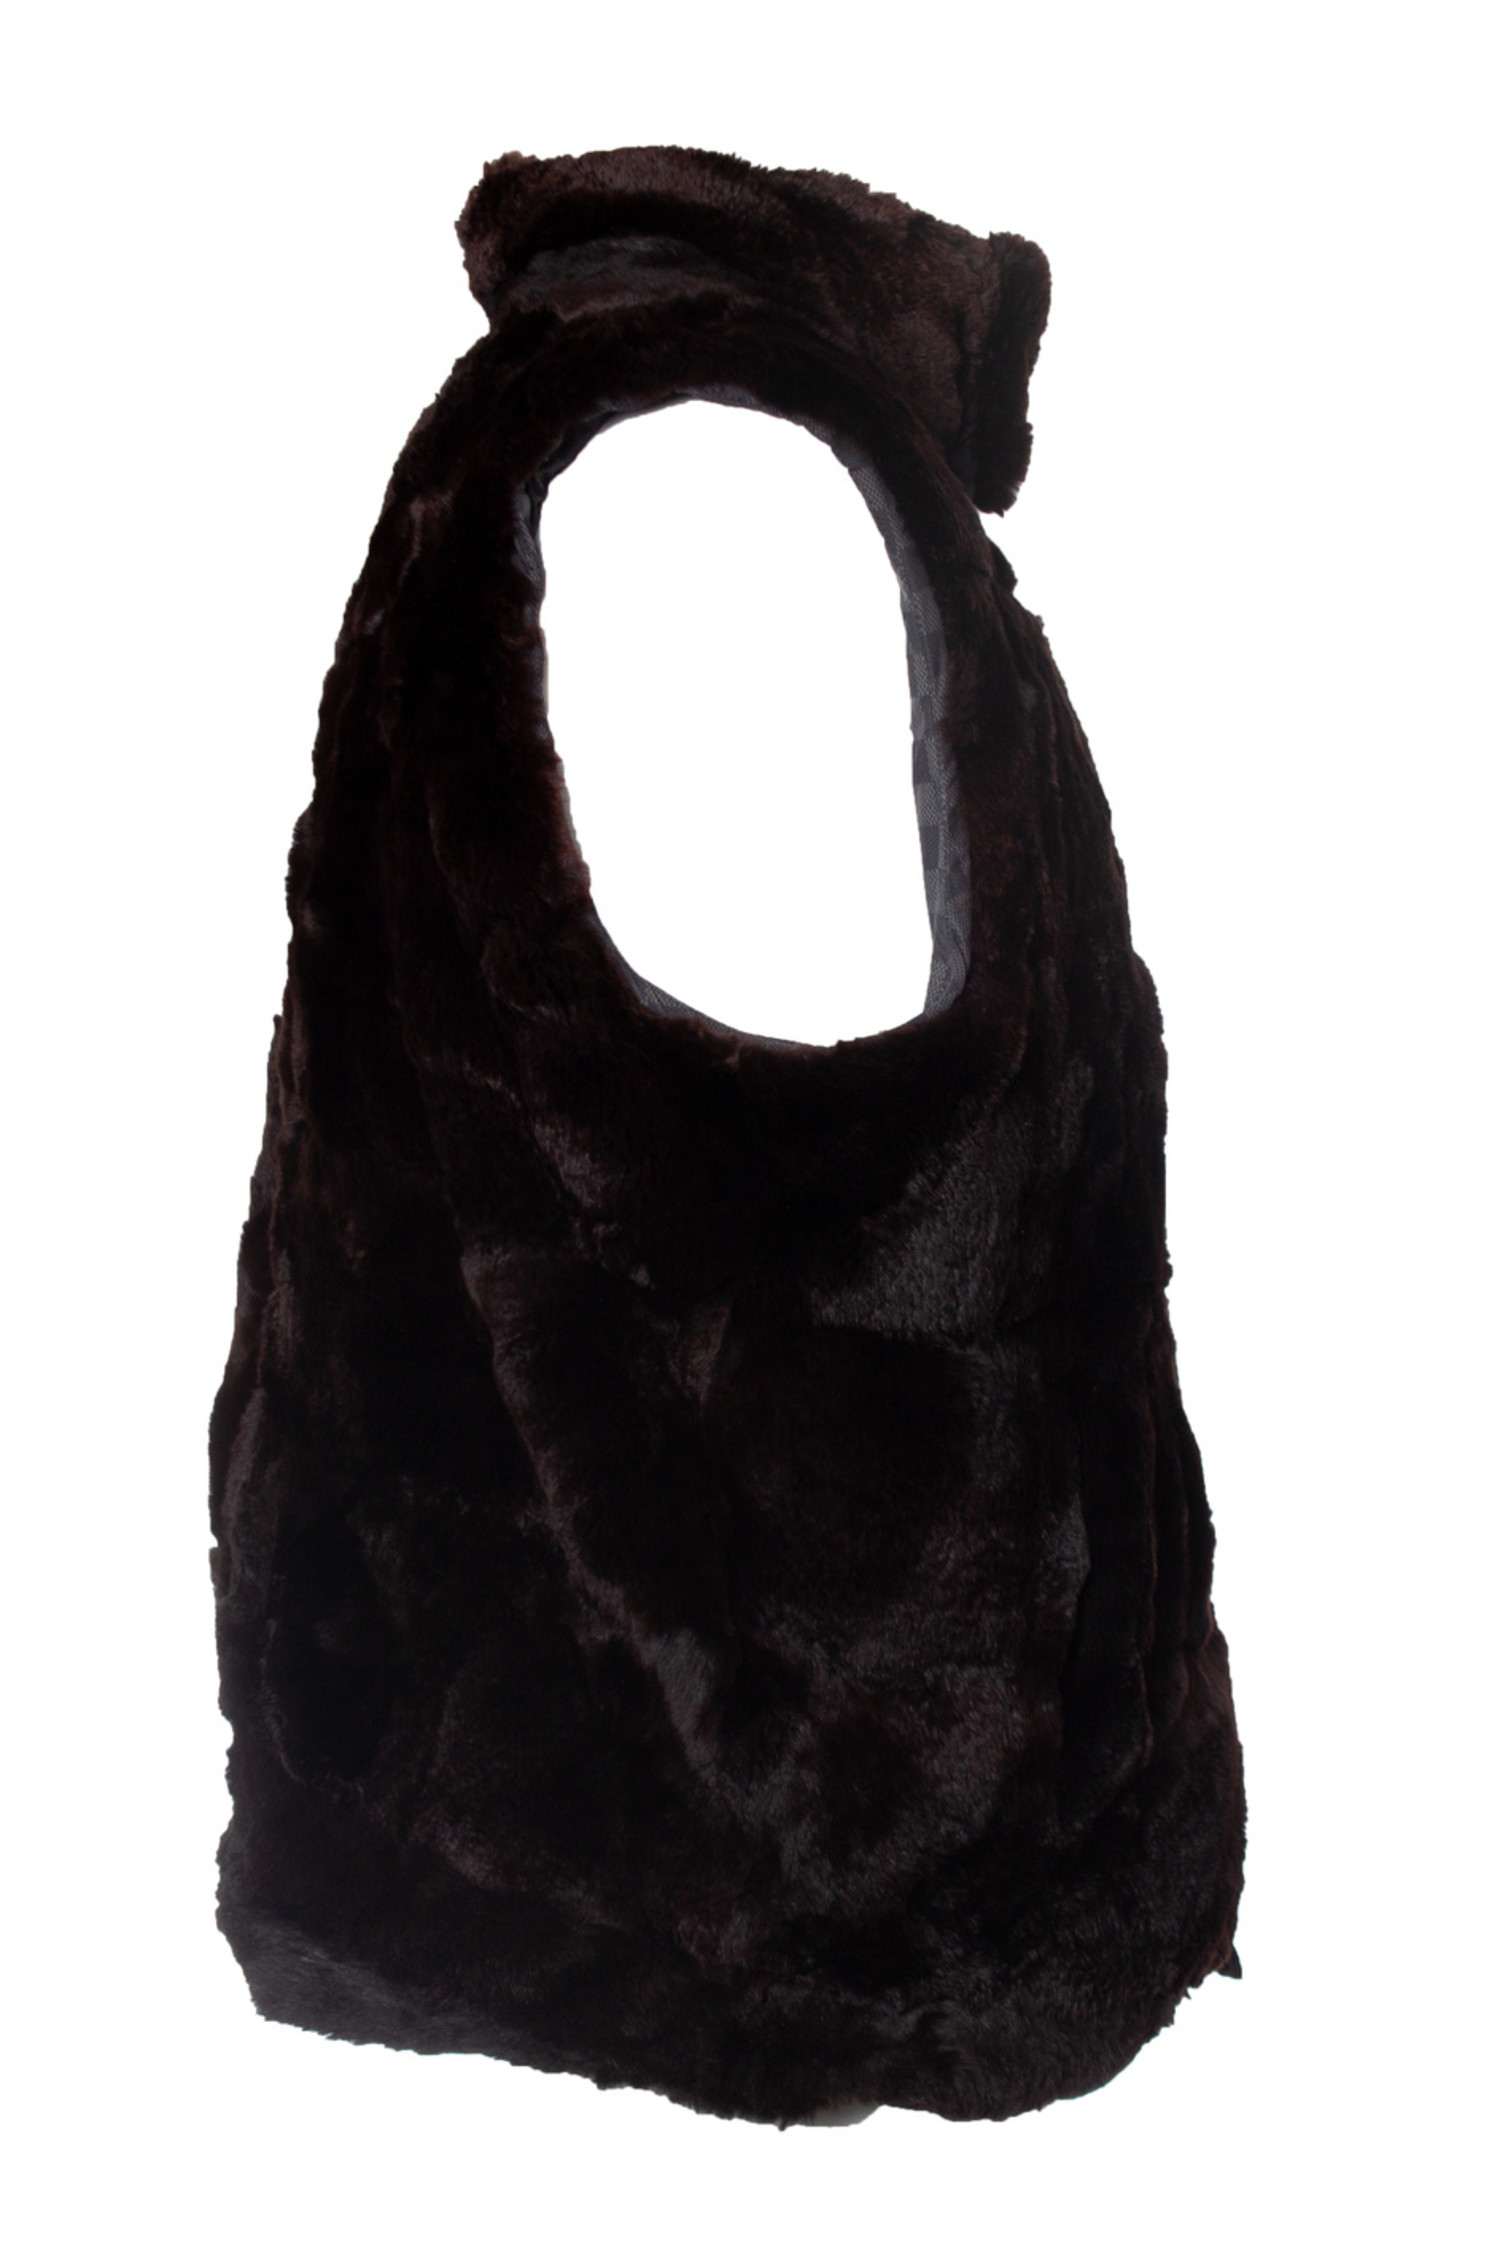 Louis Vuitton Reversible Black Rabbit Fur and Black Nylon Damier Veritable Plume d'oie Vest (Like New), Apparel in Black/Silver